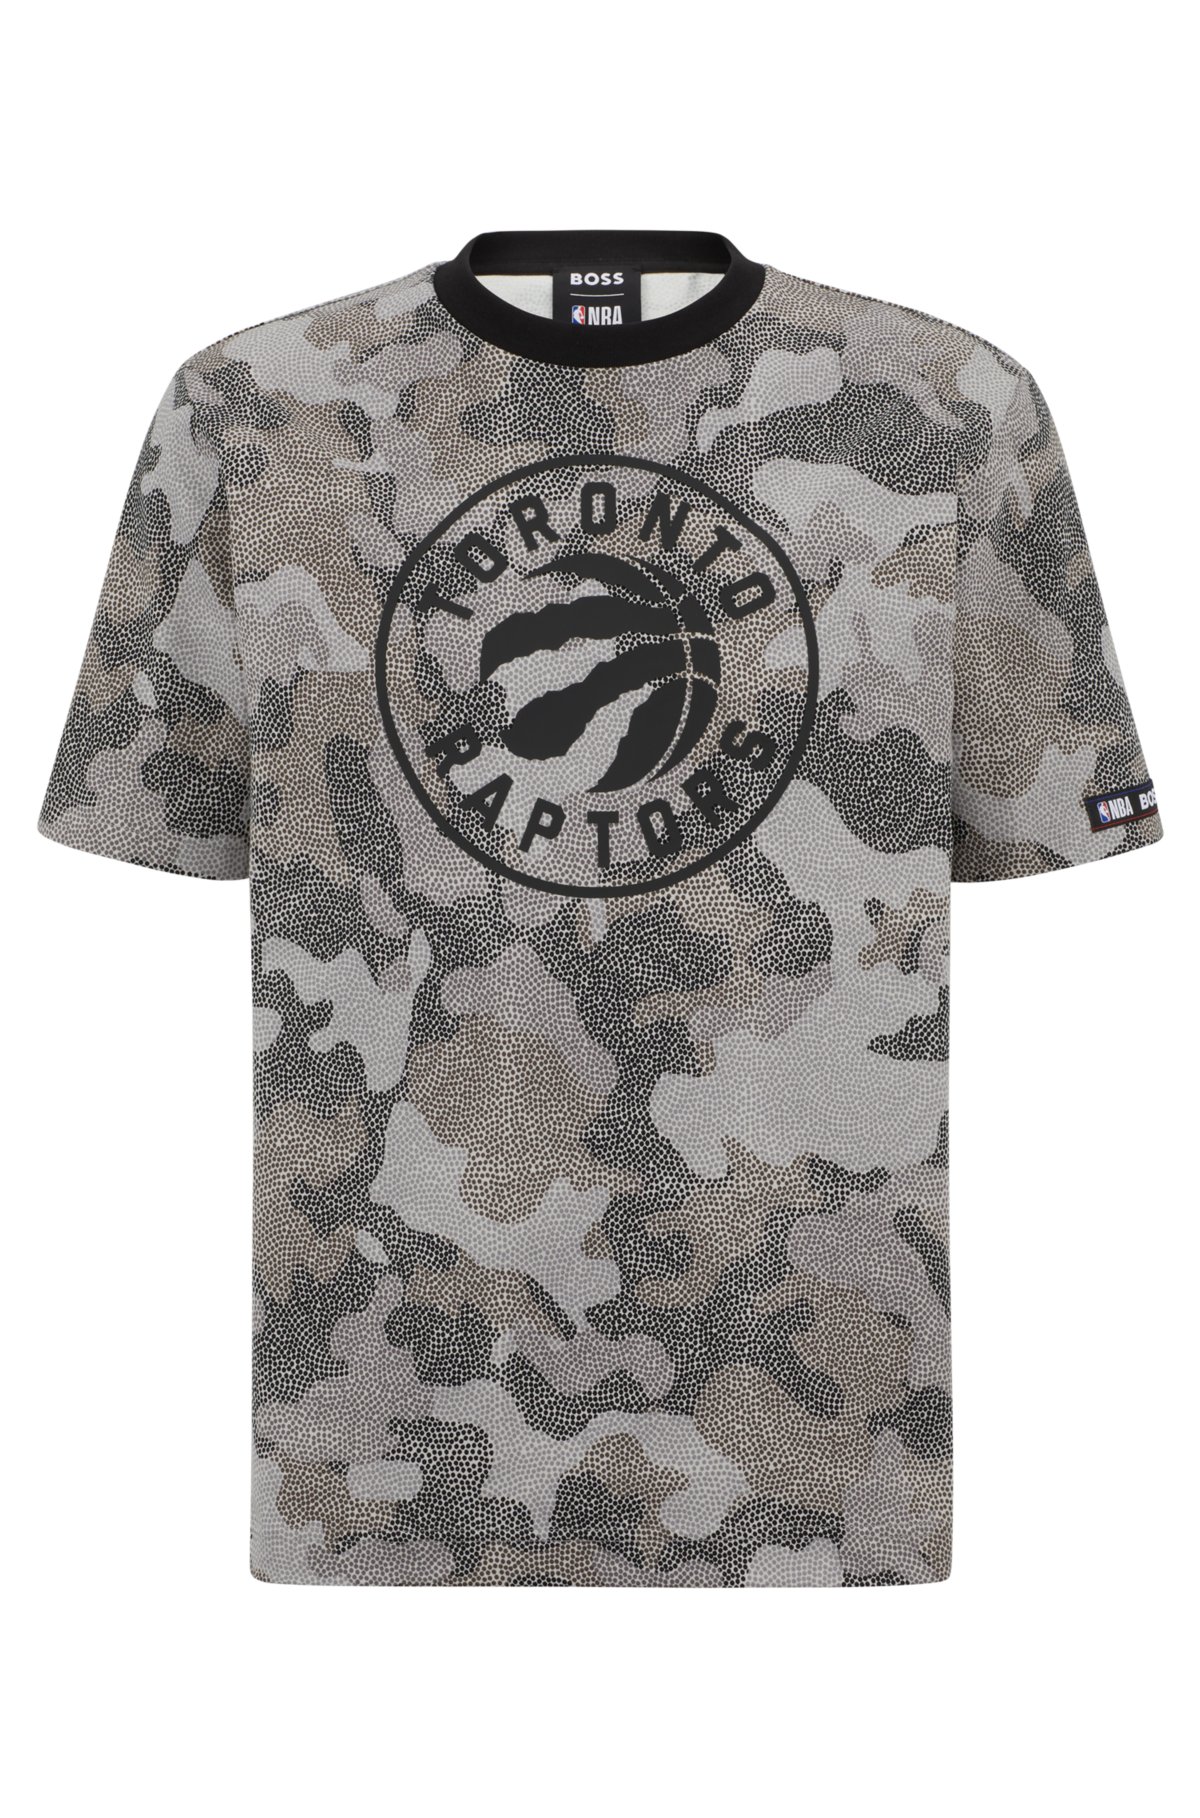 Boss & NBA Cotton-jersey T-Shirt with Camouflage Pattern - Black - Large